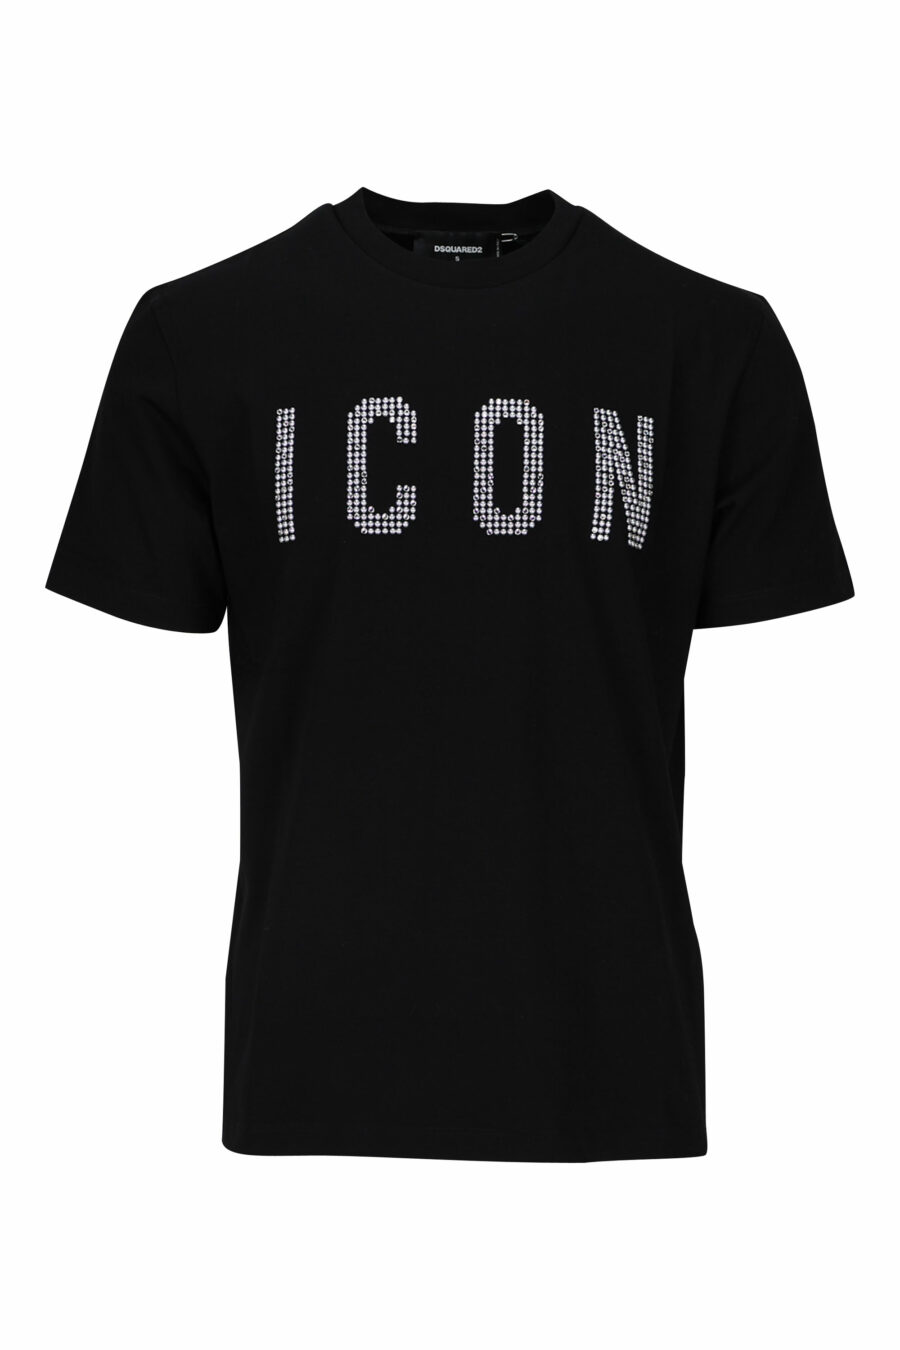 Black T-shirt with white checked "icon" logo - 8052134981399